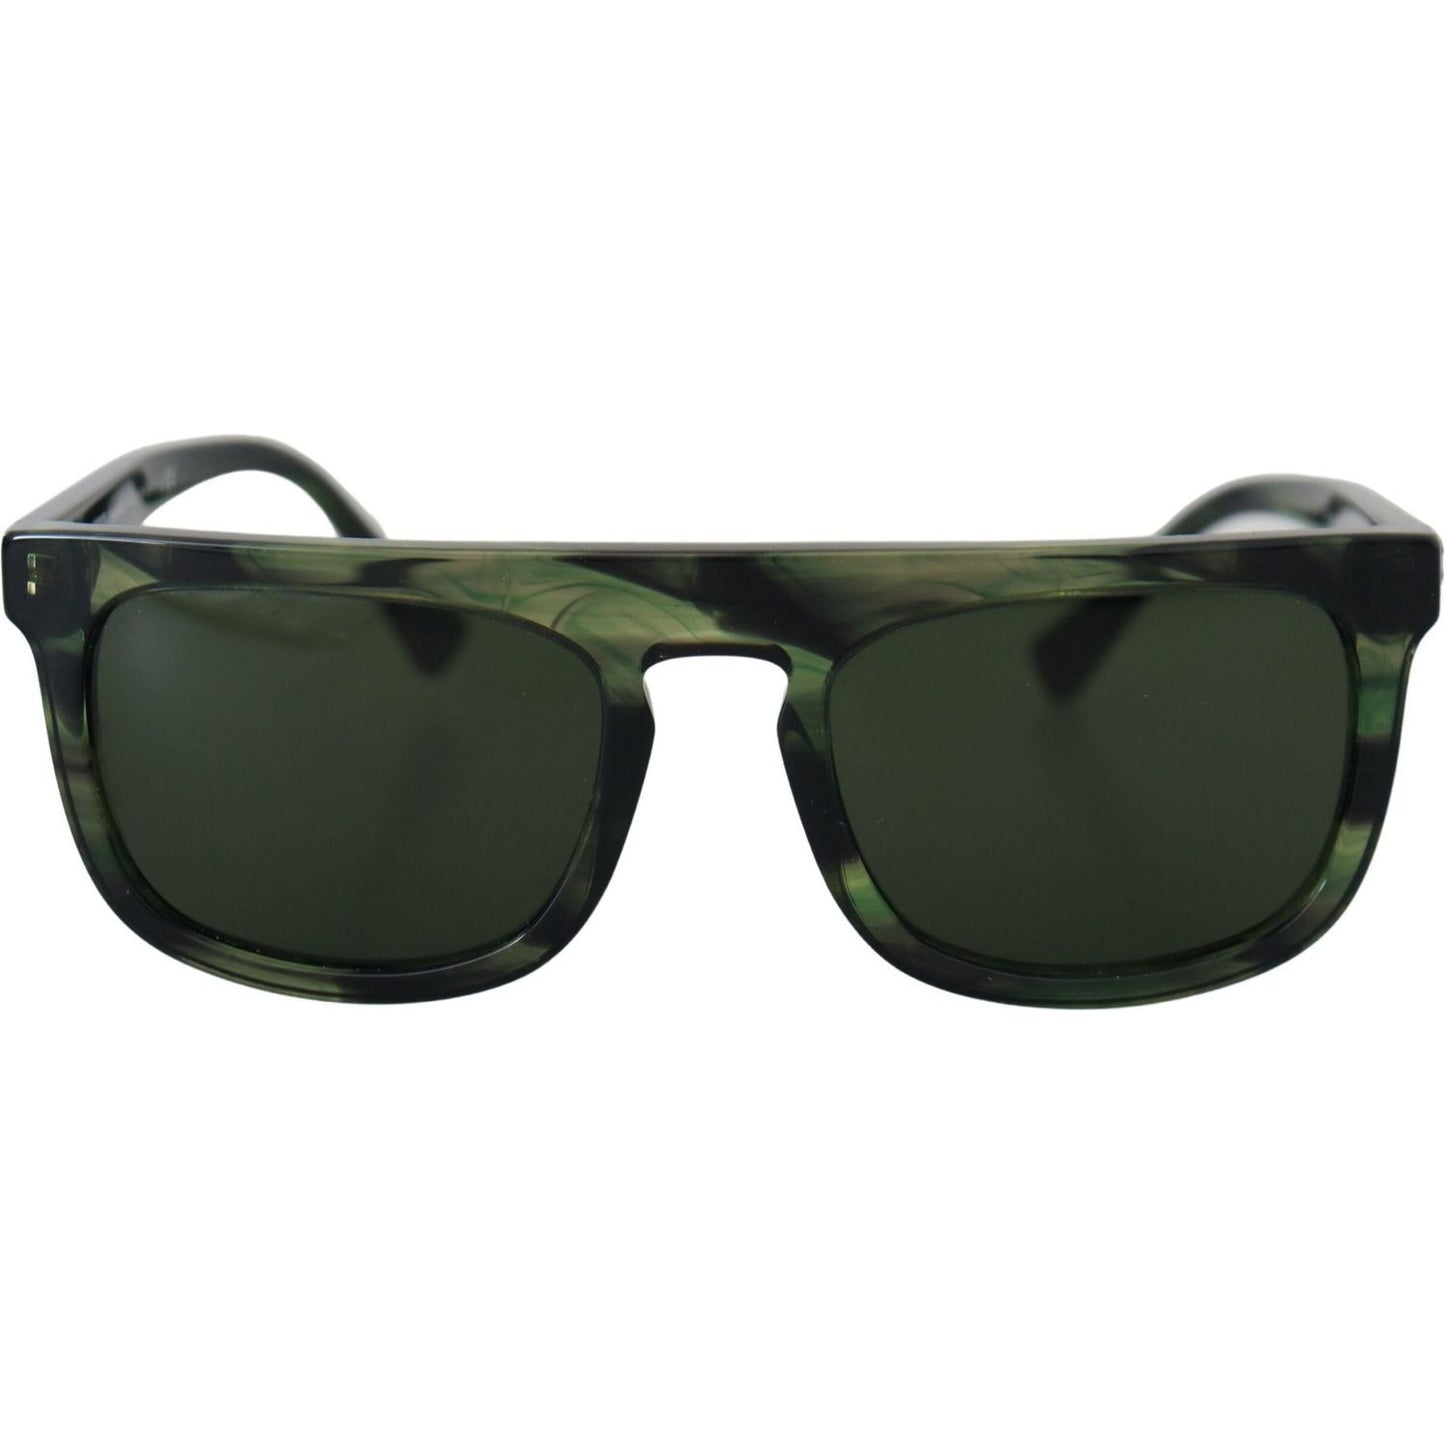 Dolce & Gabbana Chic Green UV Protection Sunglasses green-dg4288-acetate-full-rim-frame-sunglasses